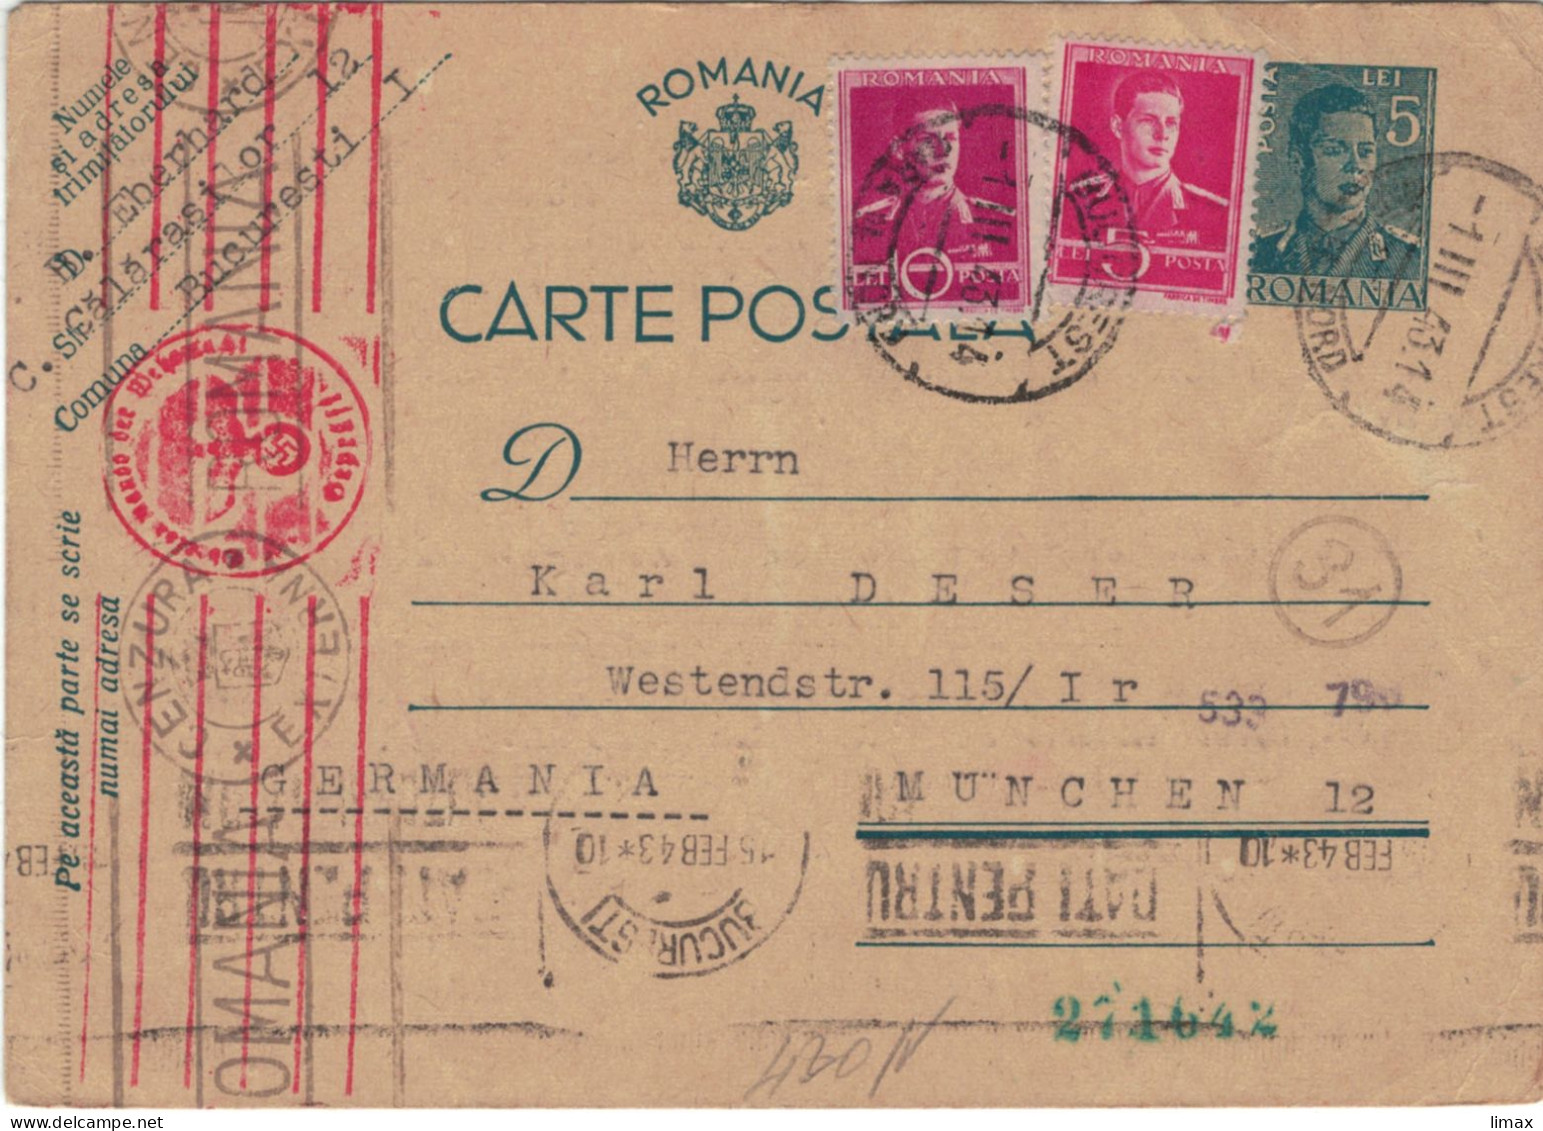 Ganzsache Bukarest 1.III.1943 > Karl Deser München - Zensur OKW Briefträgerstempel (31) - Covers & Documents